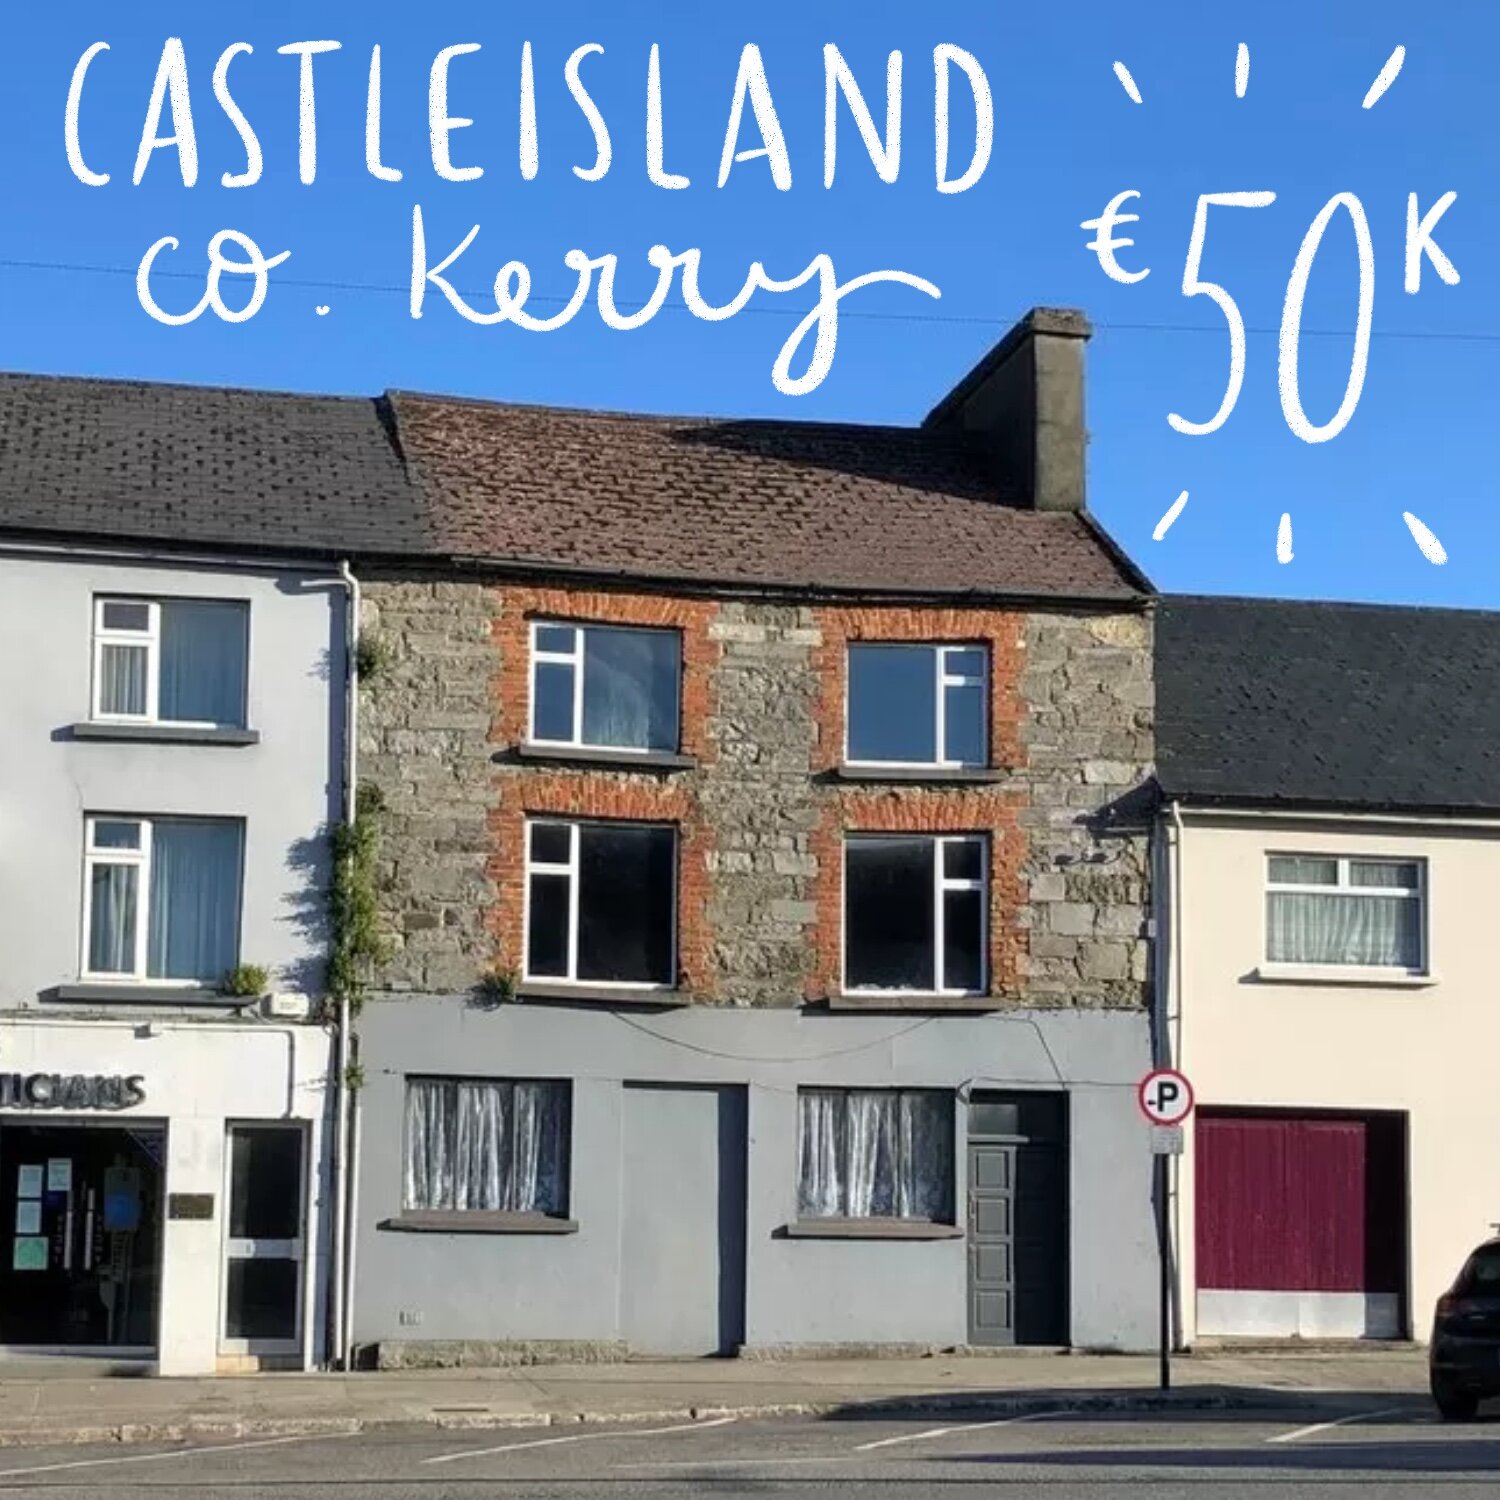  Main Street, Castleisland, Co. Kerry. €50k